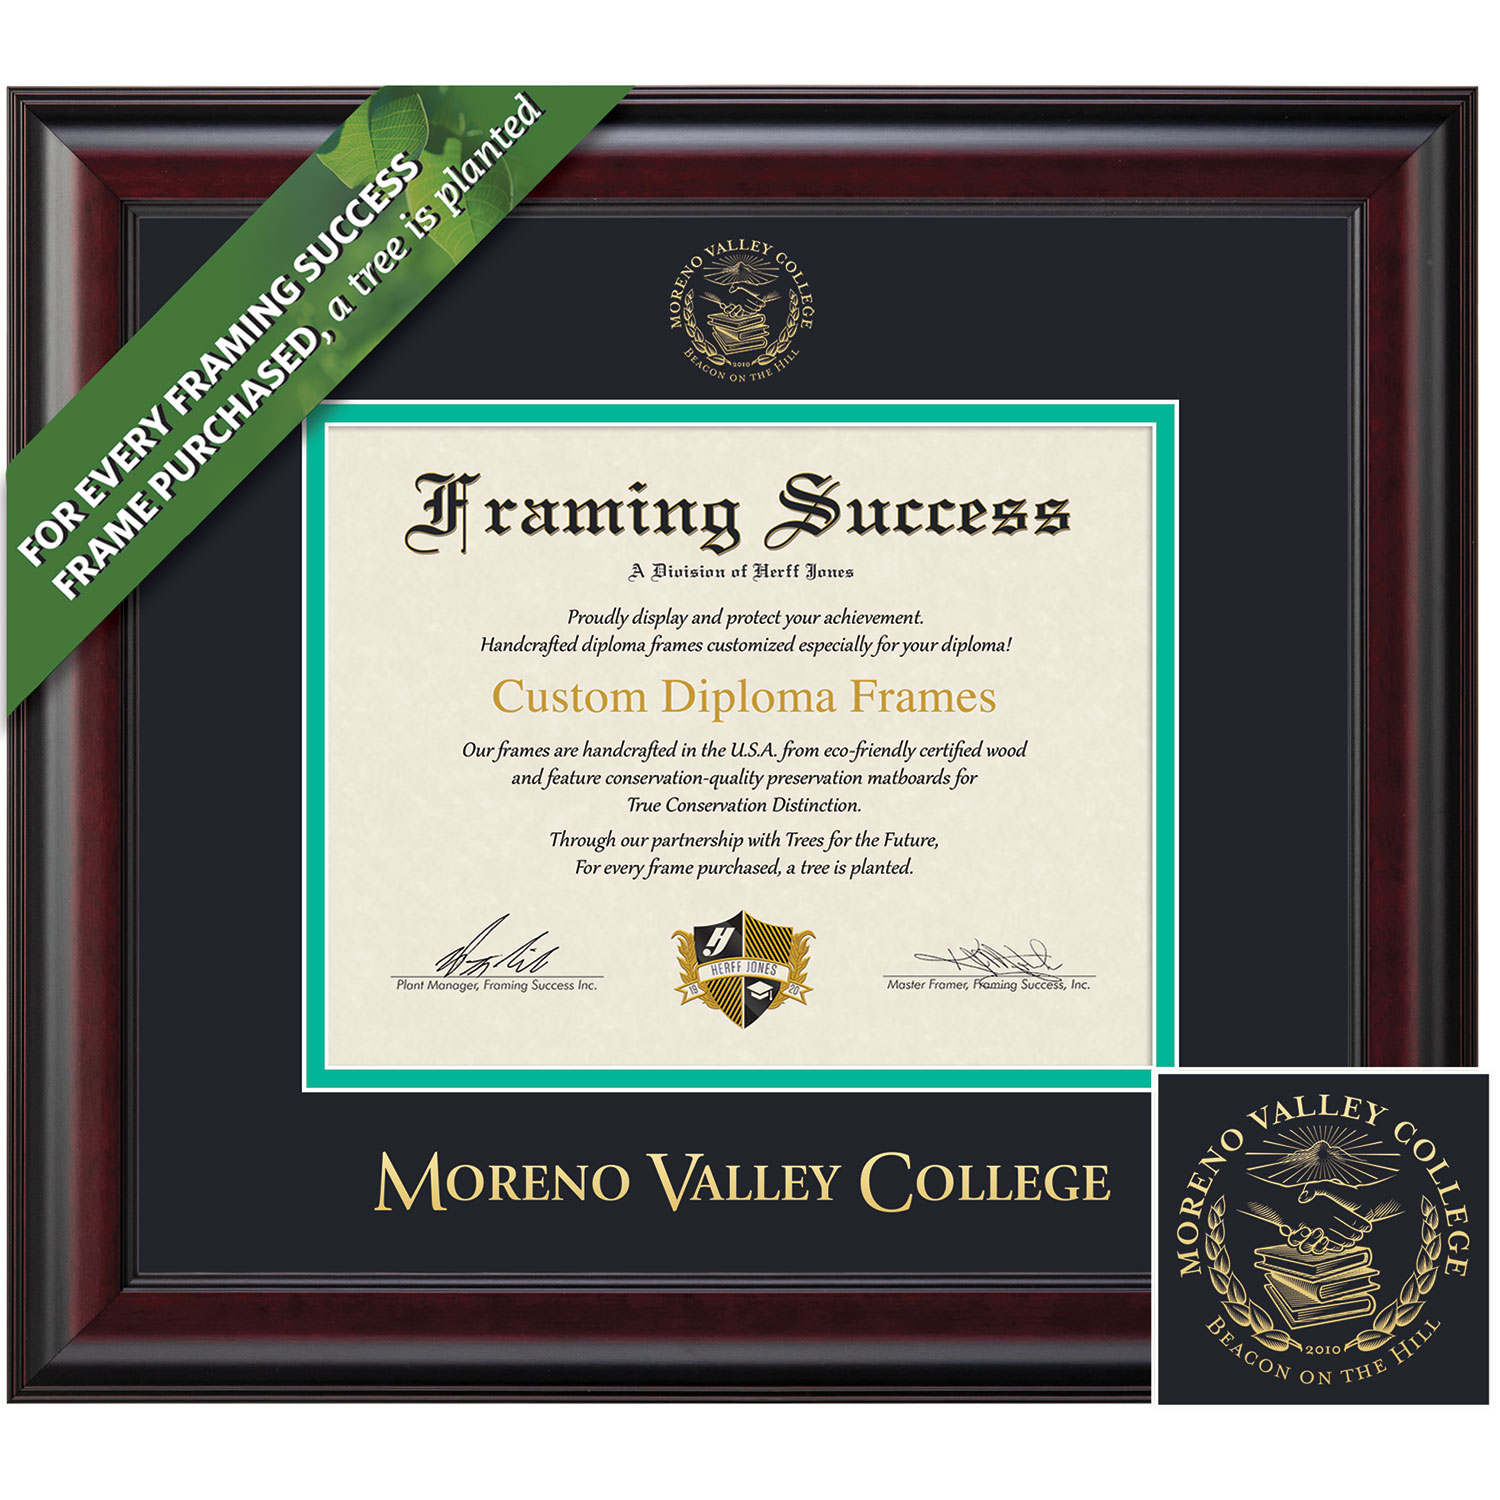 Framing Success 7 x 9 Classic Gold Embossed School Seal Associates Diploma Frame